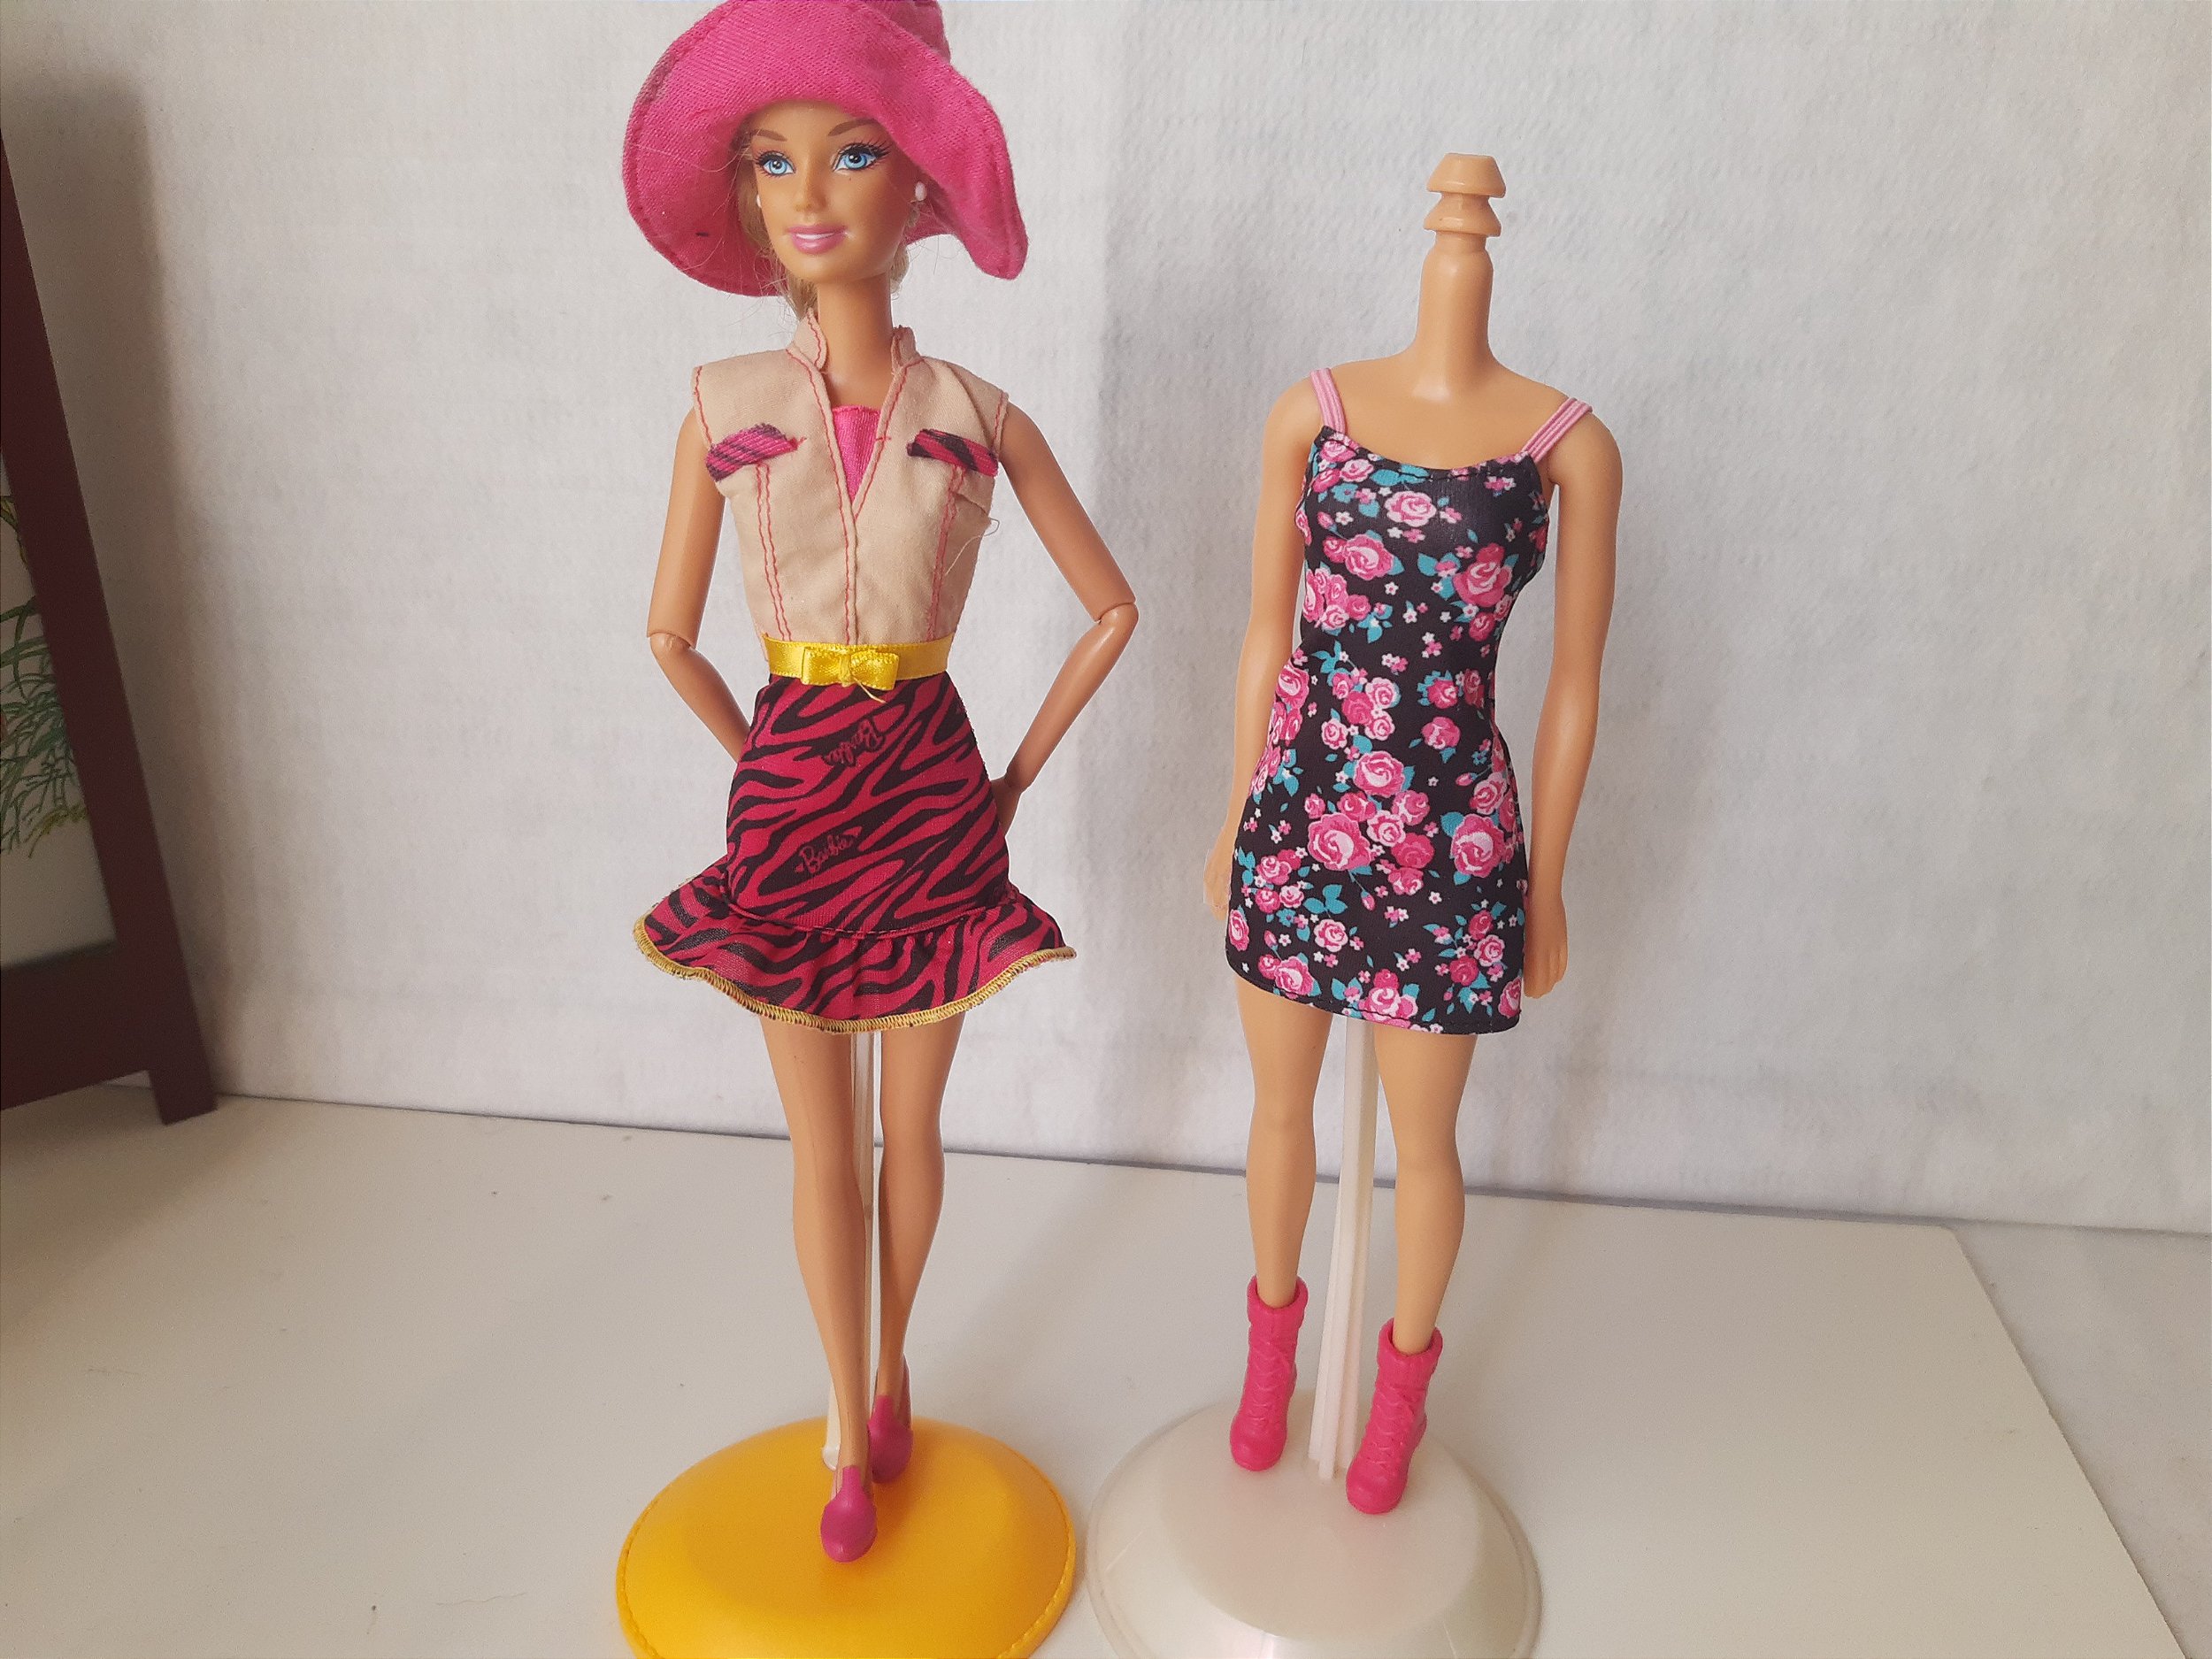 Cartela Roupas Para Barbie Mattel